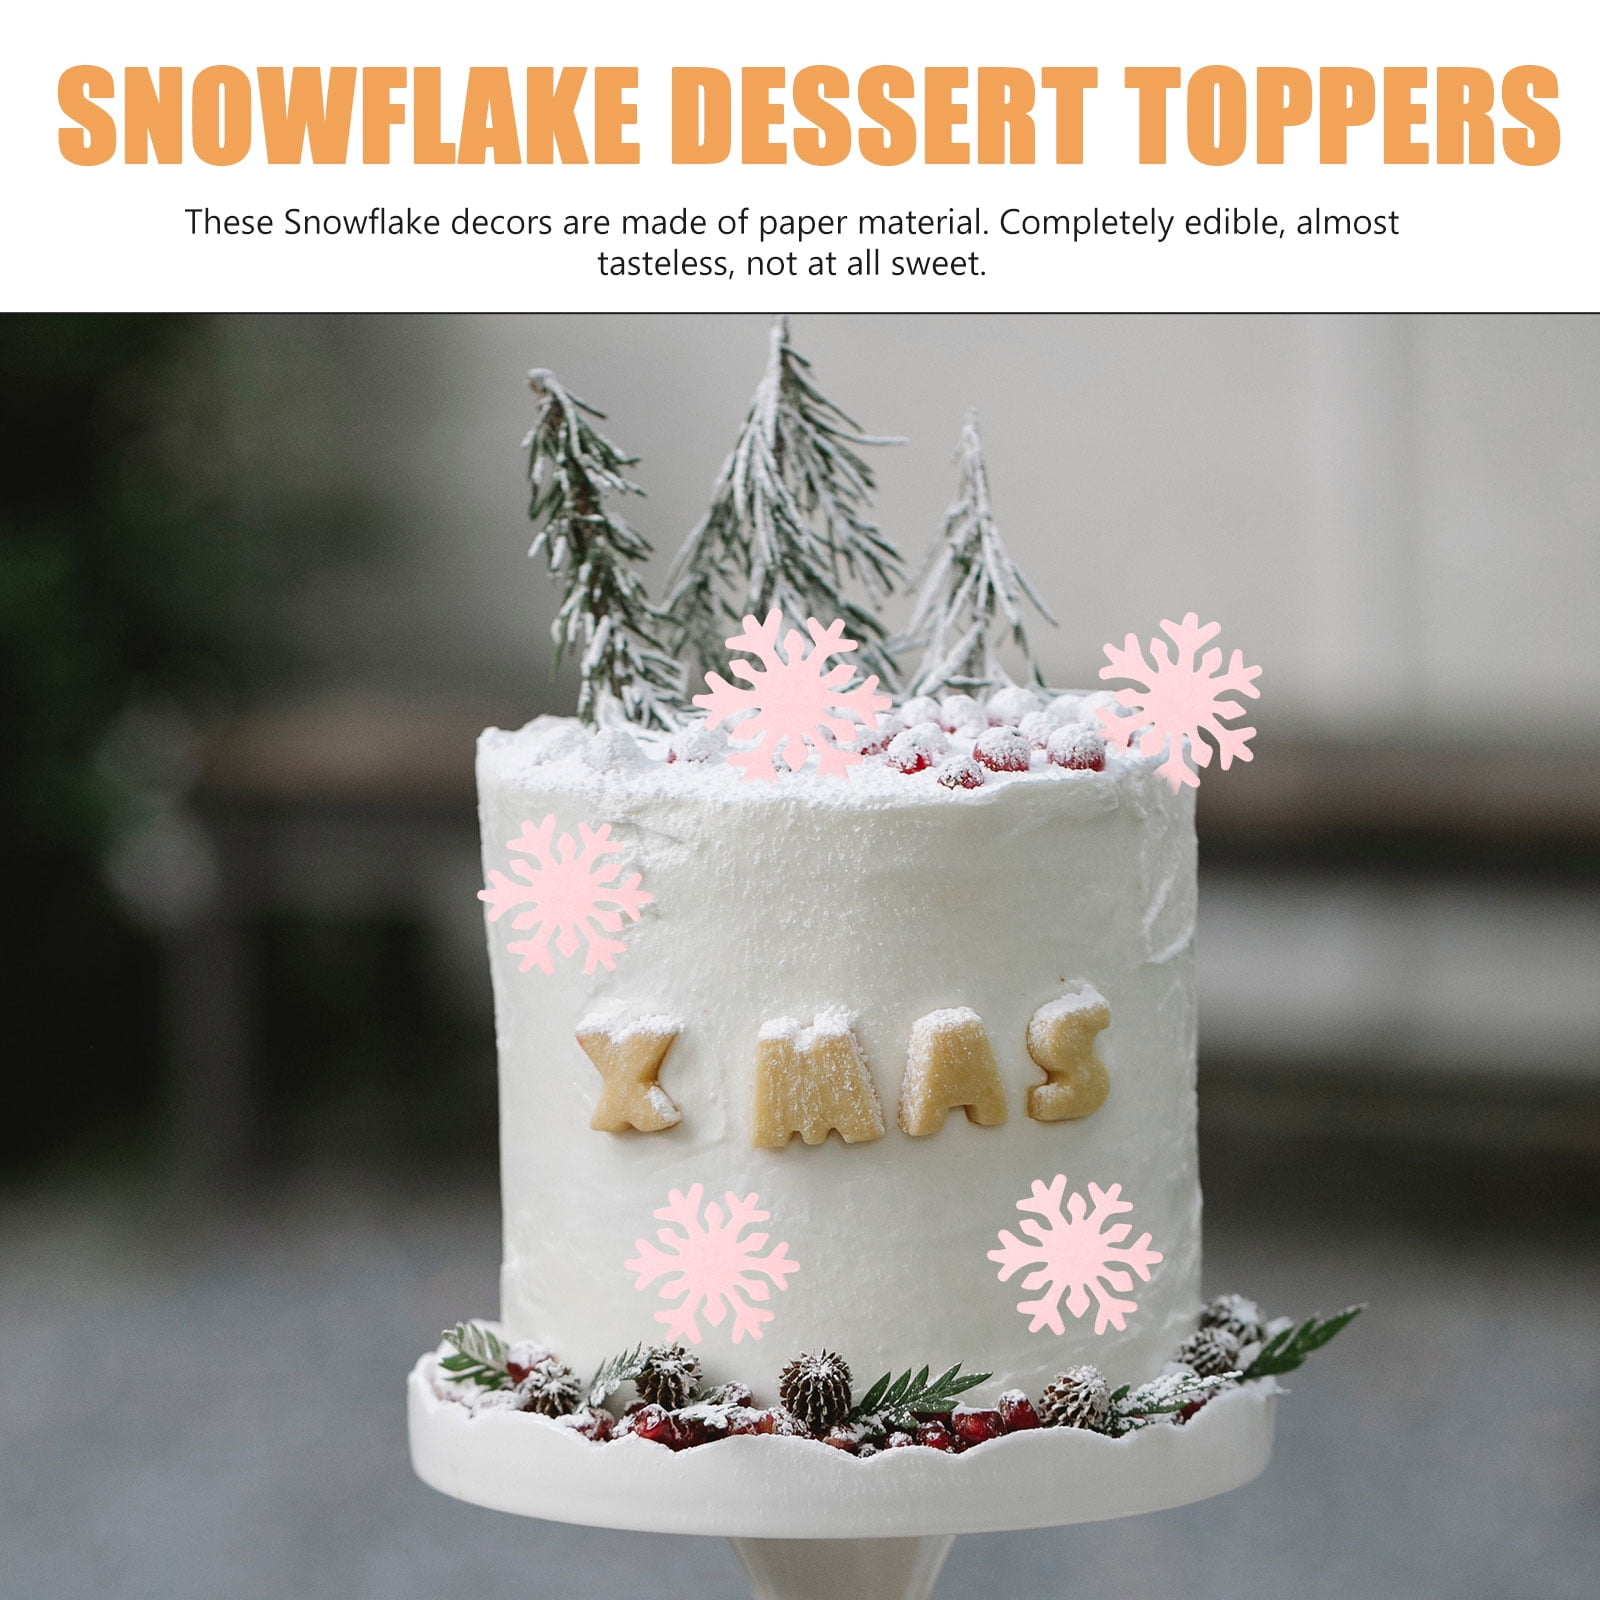 Edible snowflakes for cake decorating 50pcs Edible Snowflakes Cake Decor  Cupcake Toppers Winter Christmas Party Cake Decor 